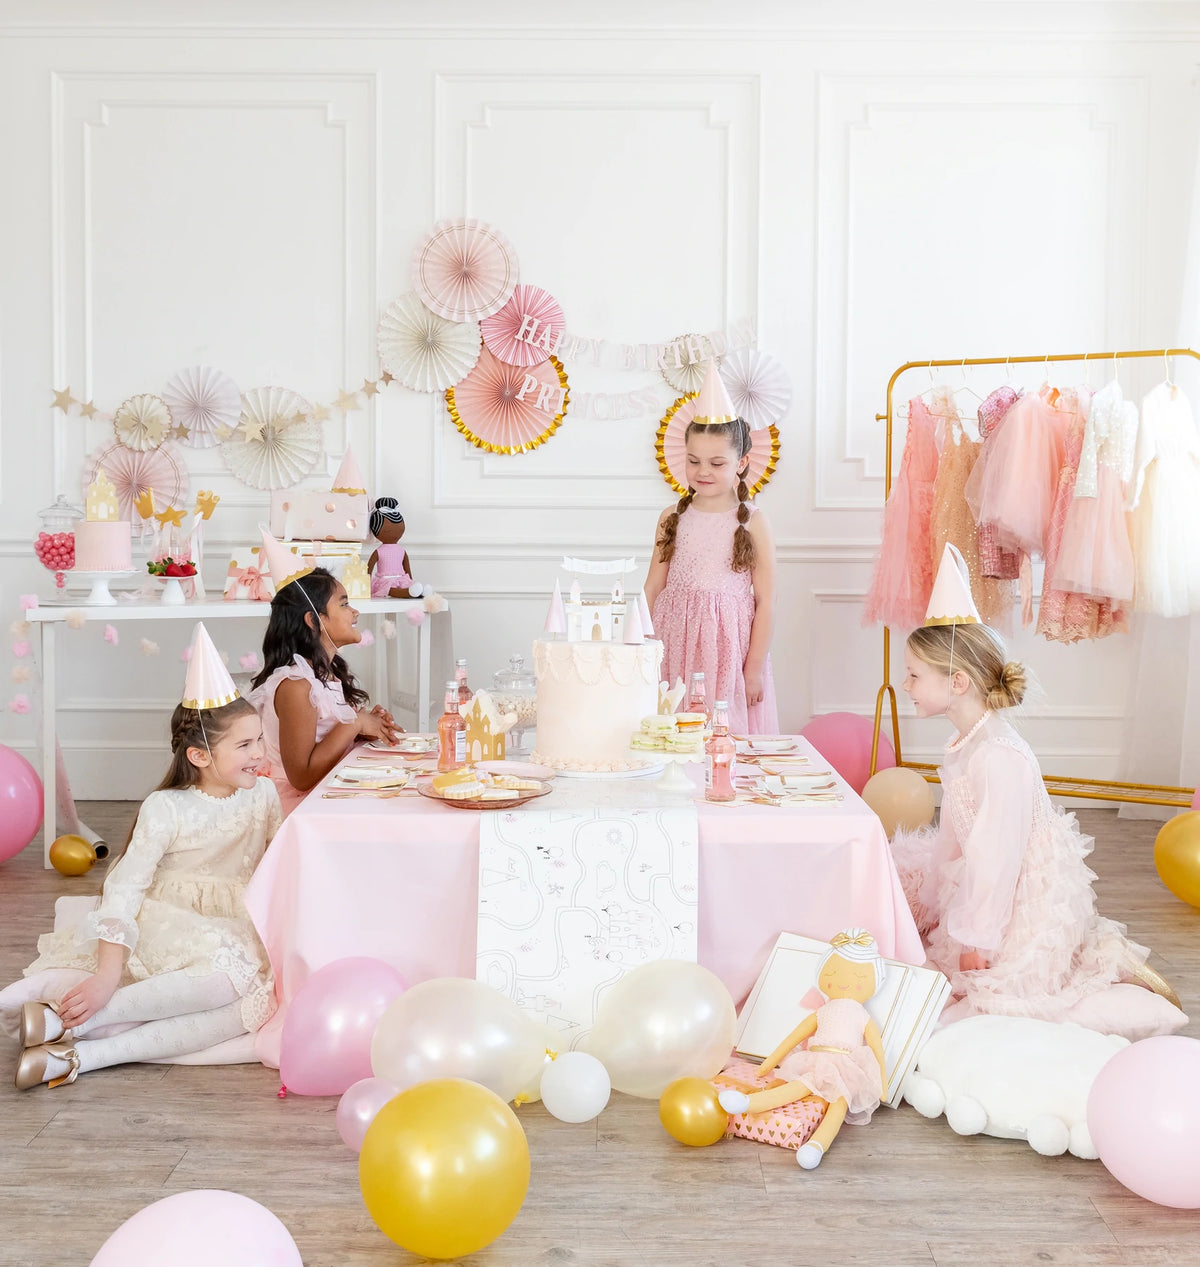 Princess Party: decorations